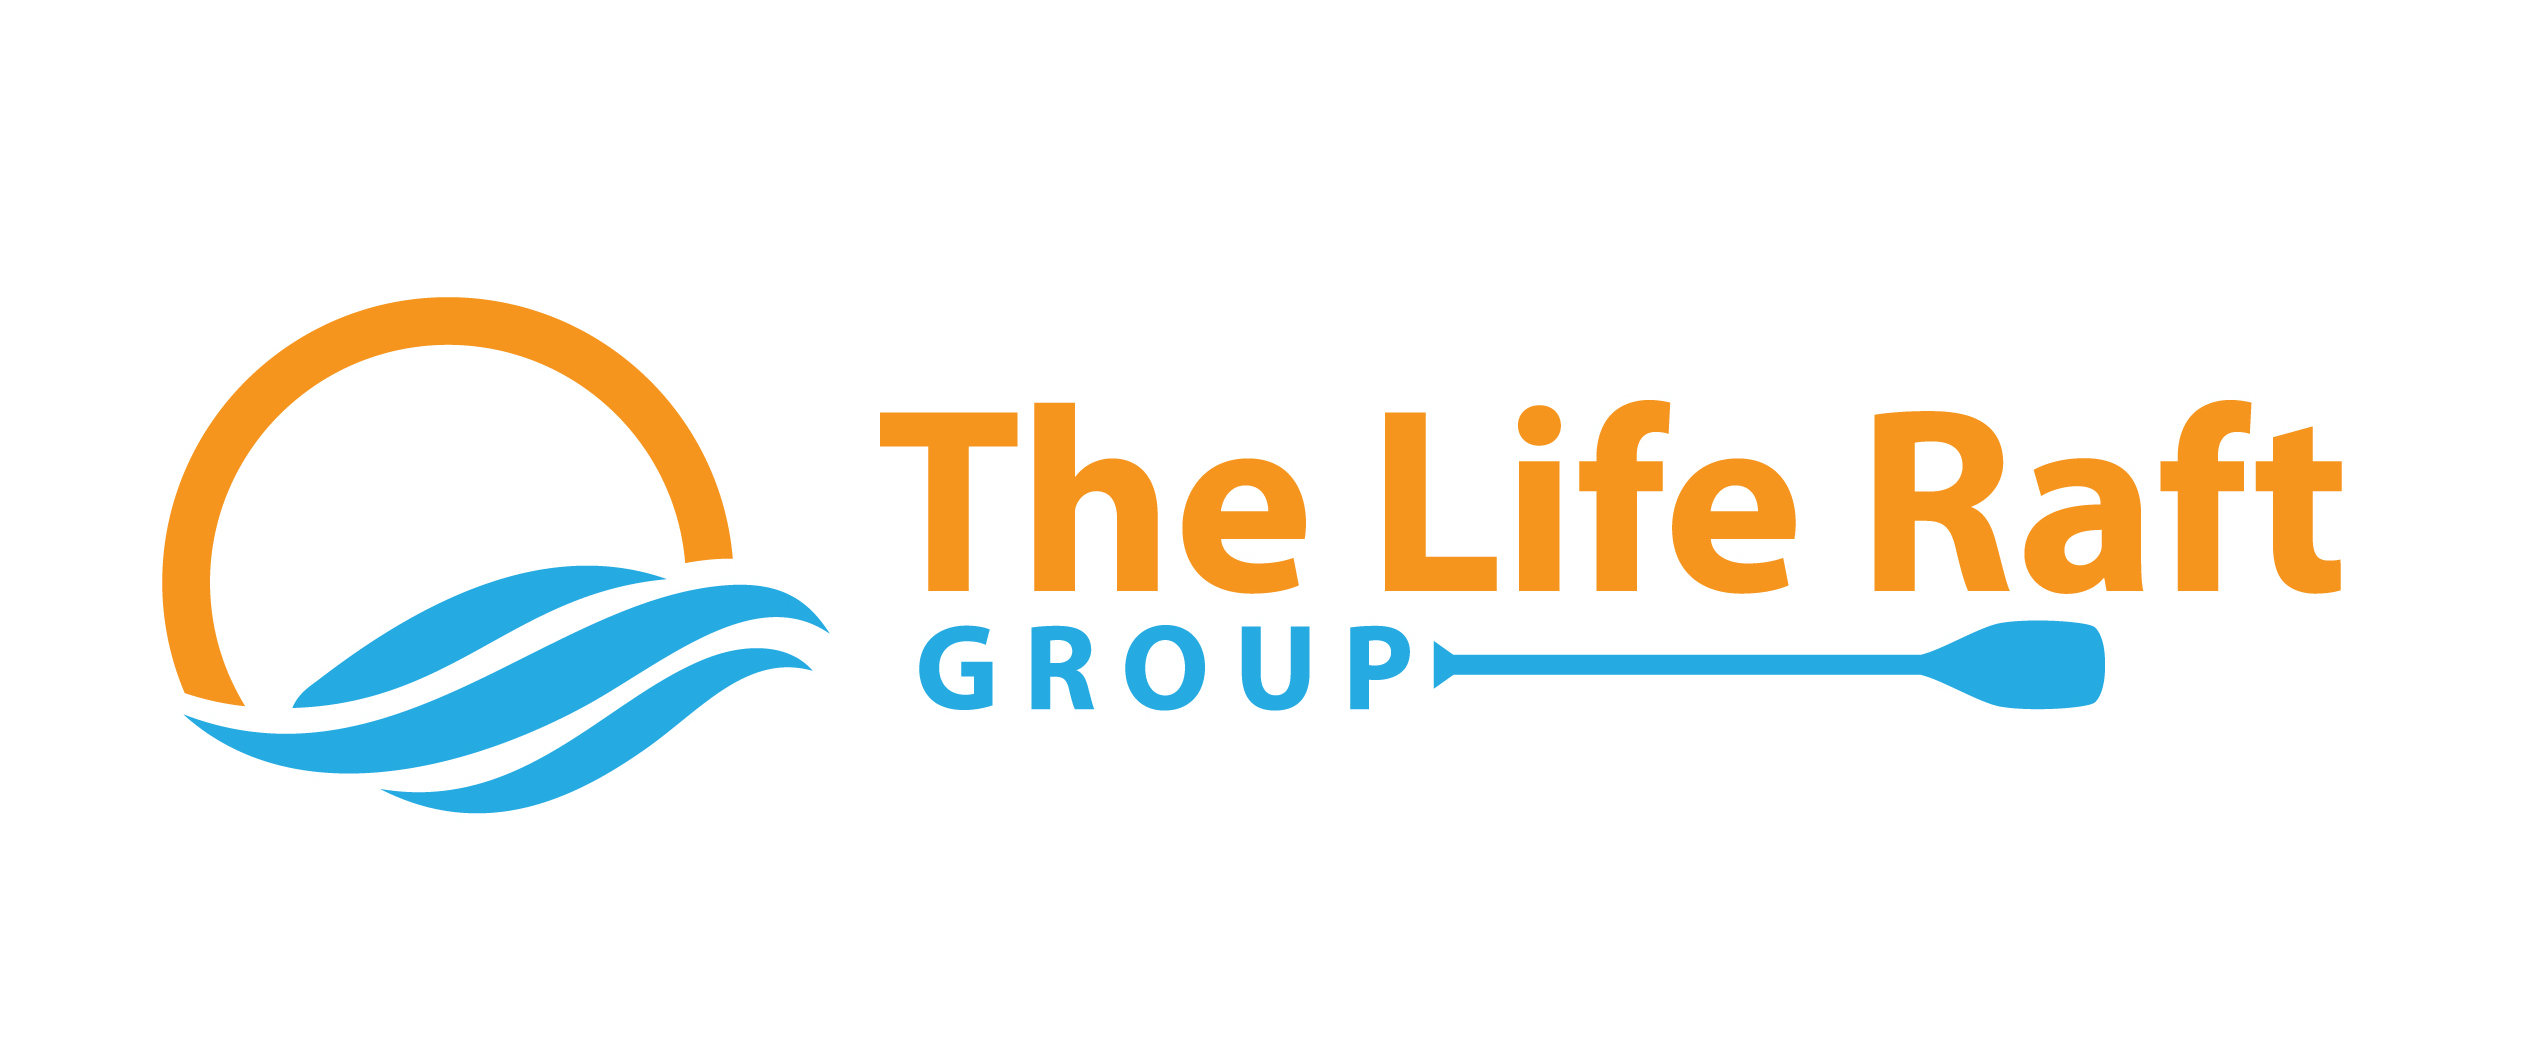 The-Life-Raft-Group-logo-horizontal